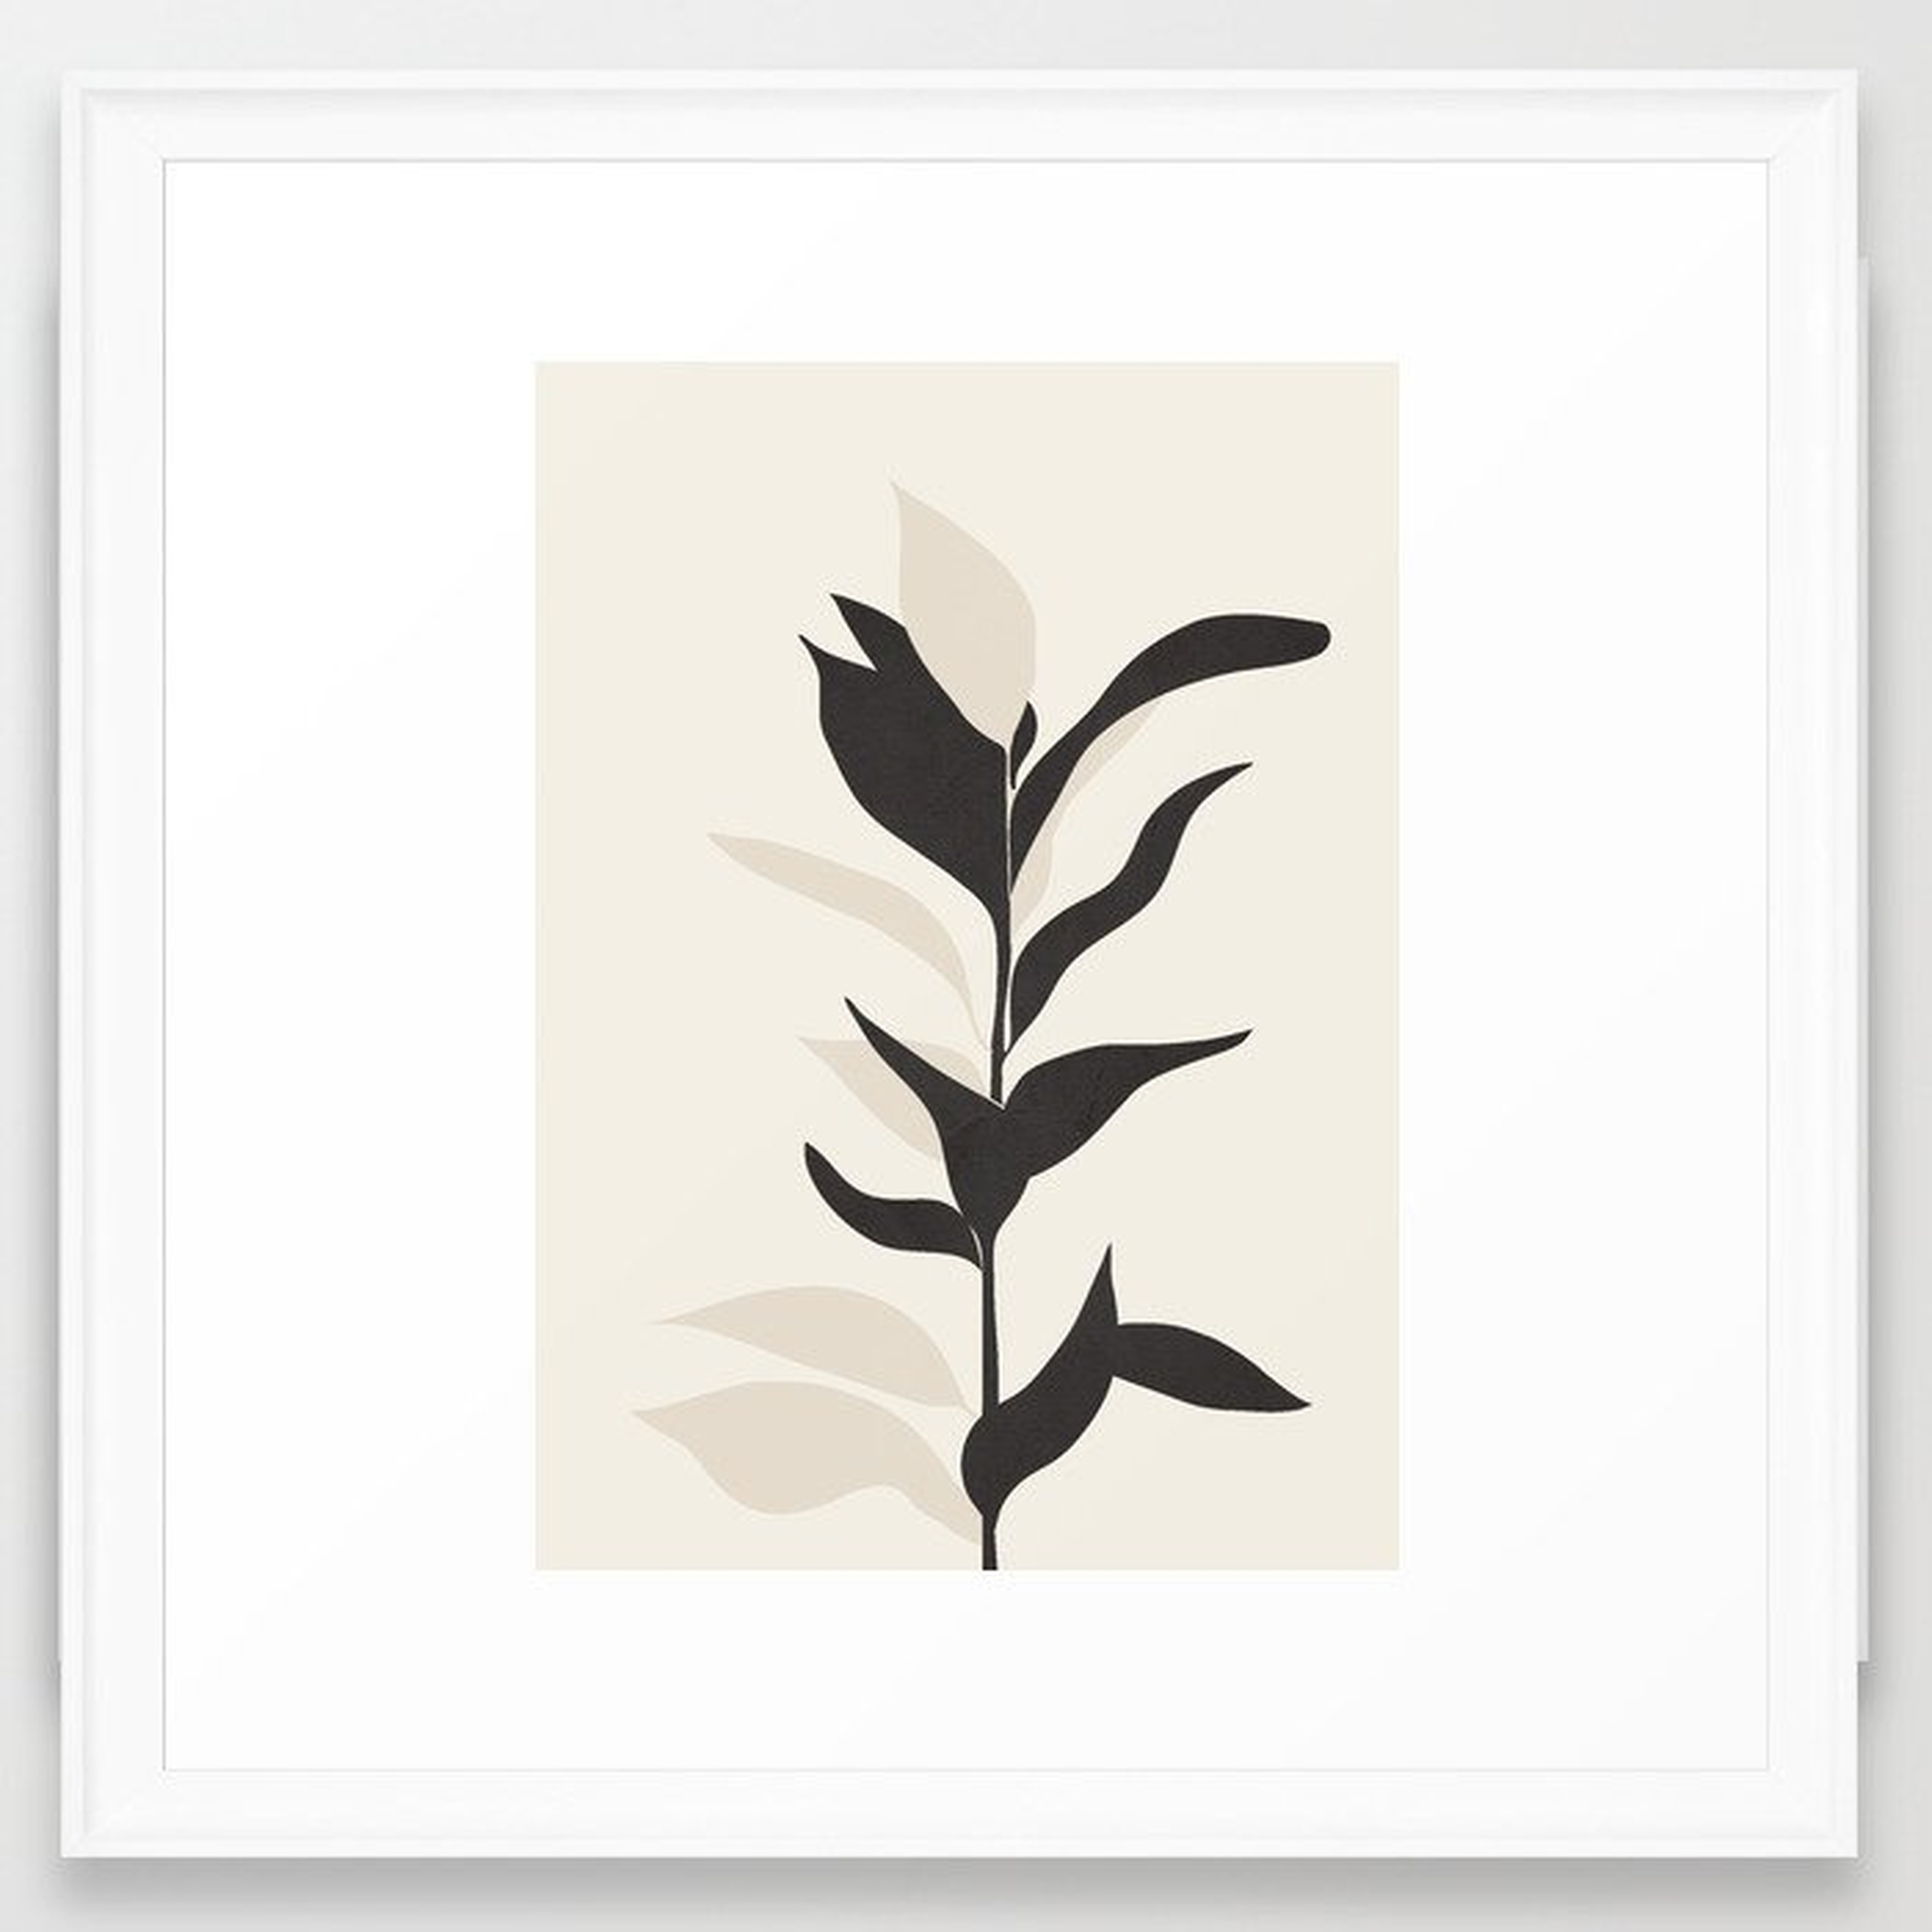 Abstract Minimal Plant Framed Art Print 22" x 22" - Society6